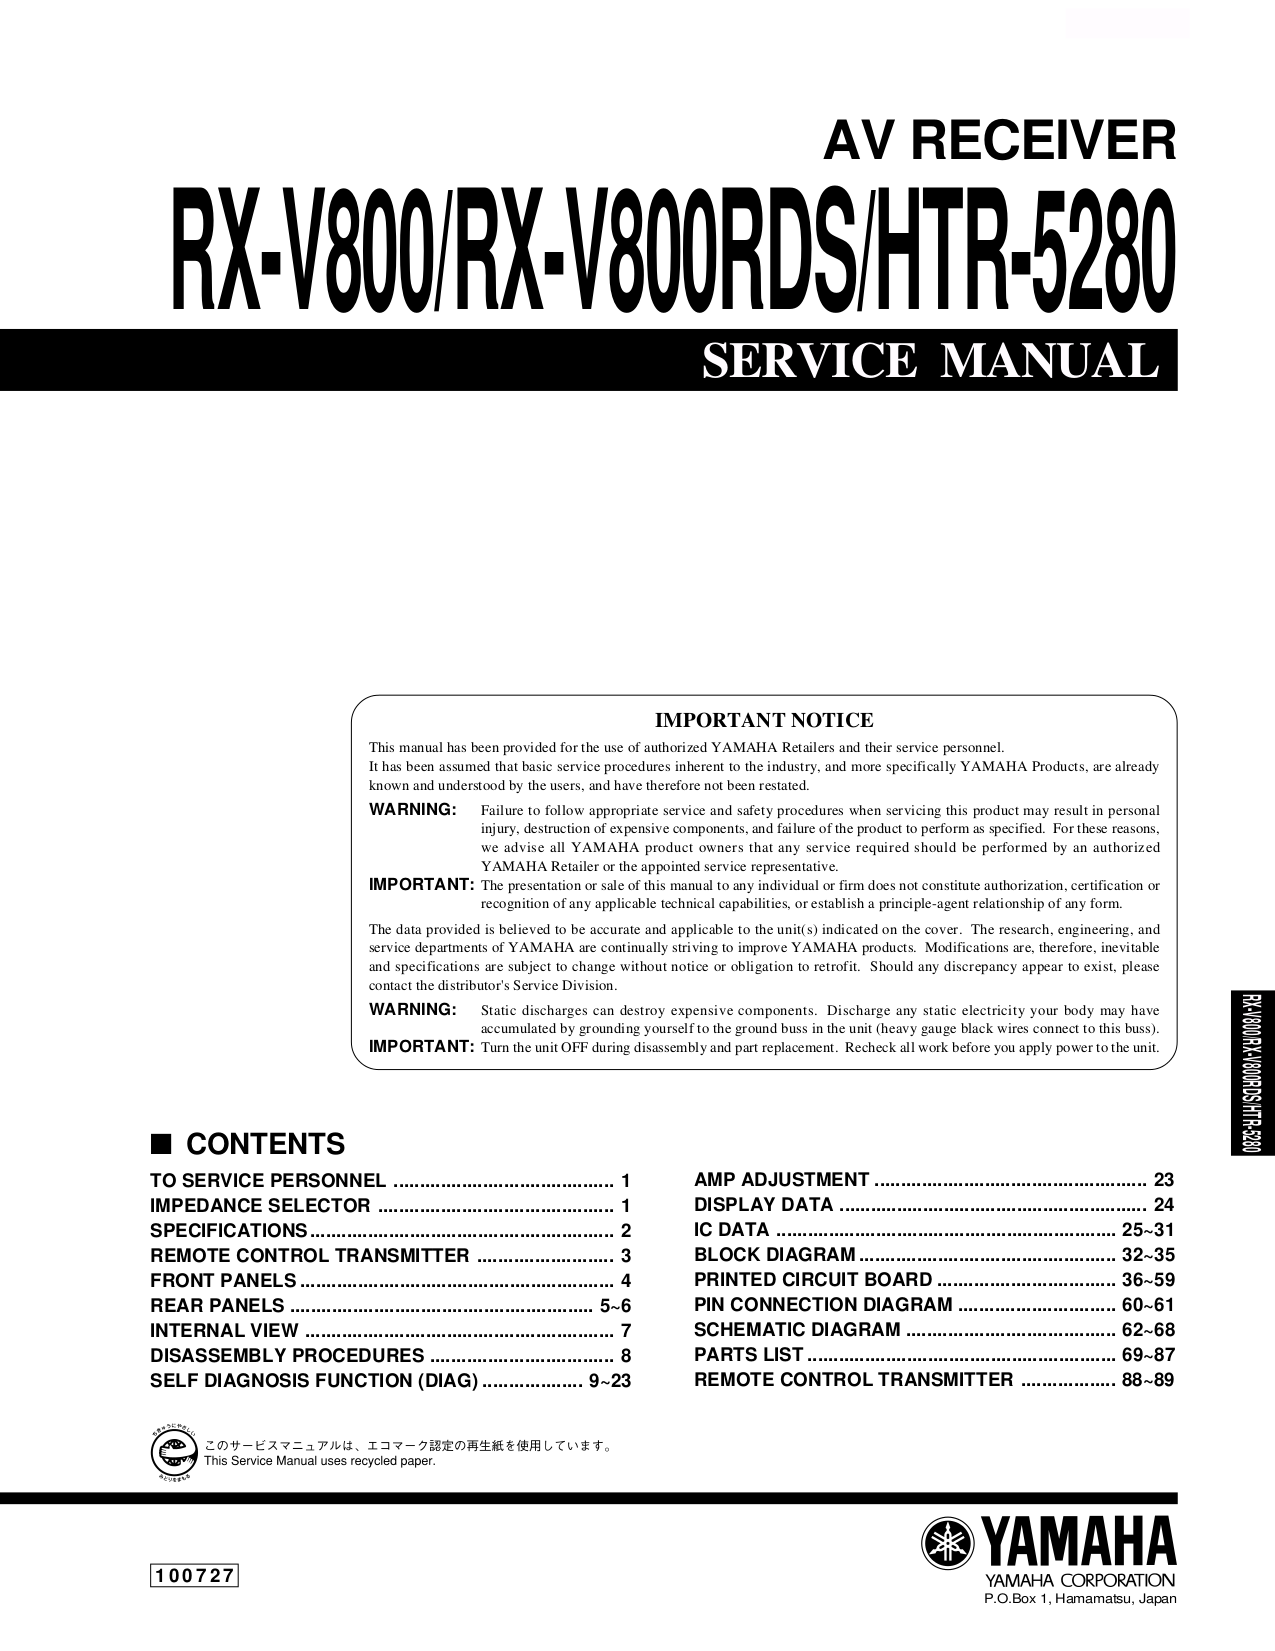 Download free pdf for Yamaha RX-V800 Receiver manual